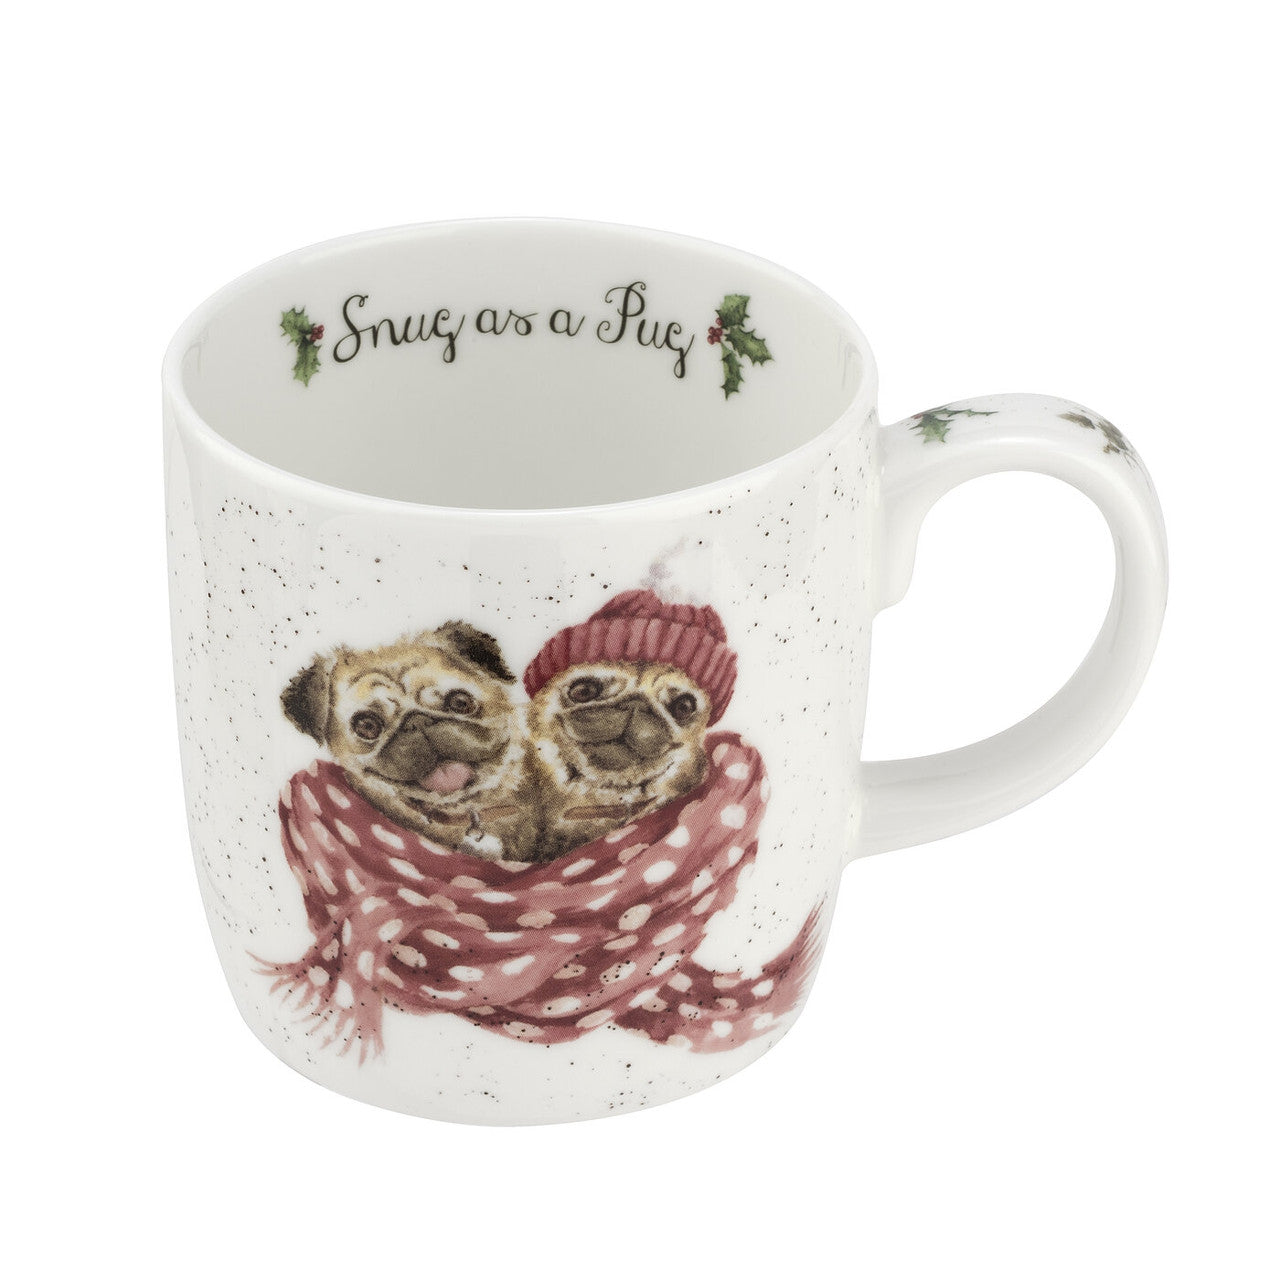 'Snug as a Pug' Bone China Mug from Wrendale Designs and Portmeirion